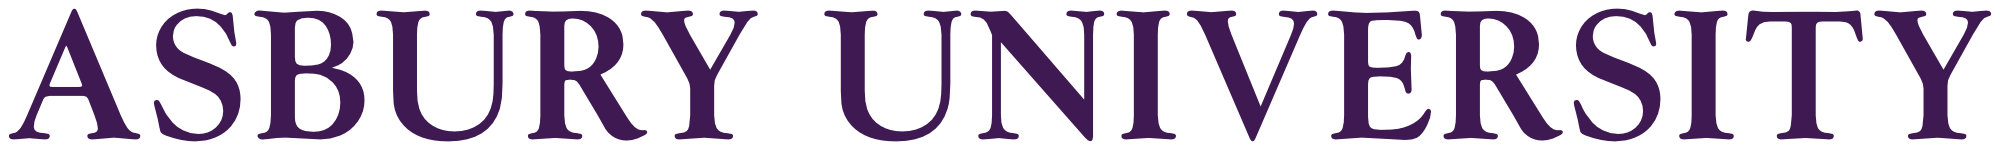 Asbury University Logo Wordmark 1